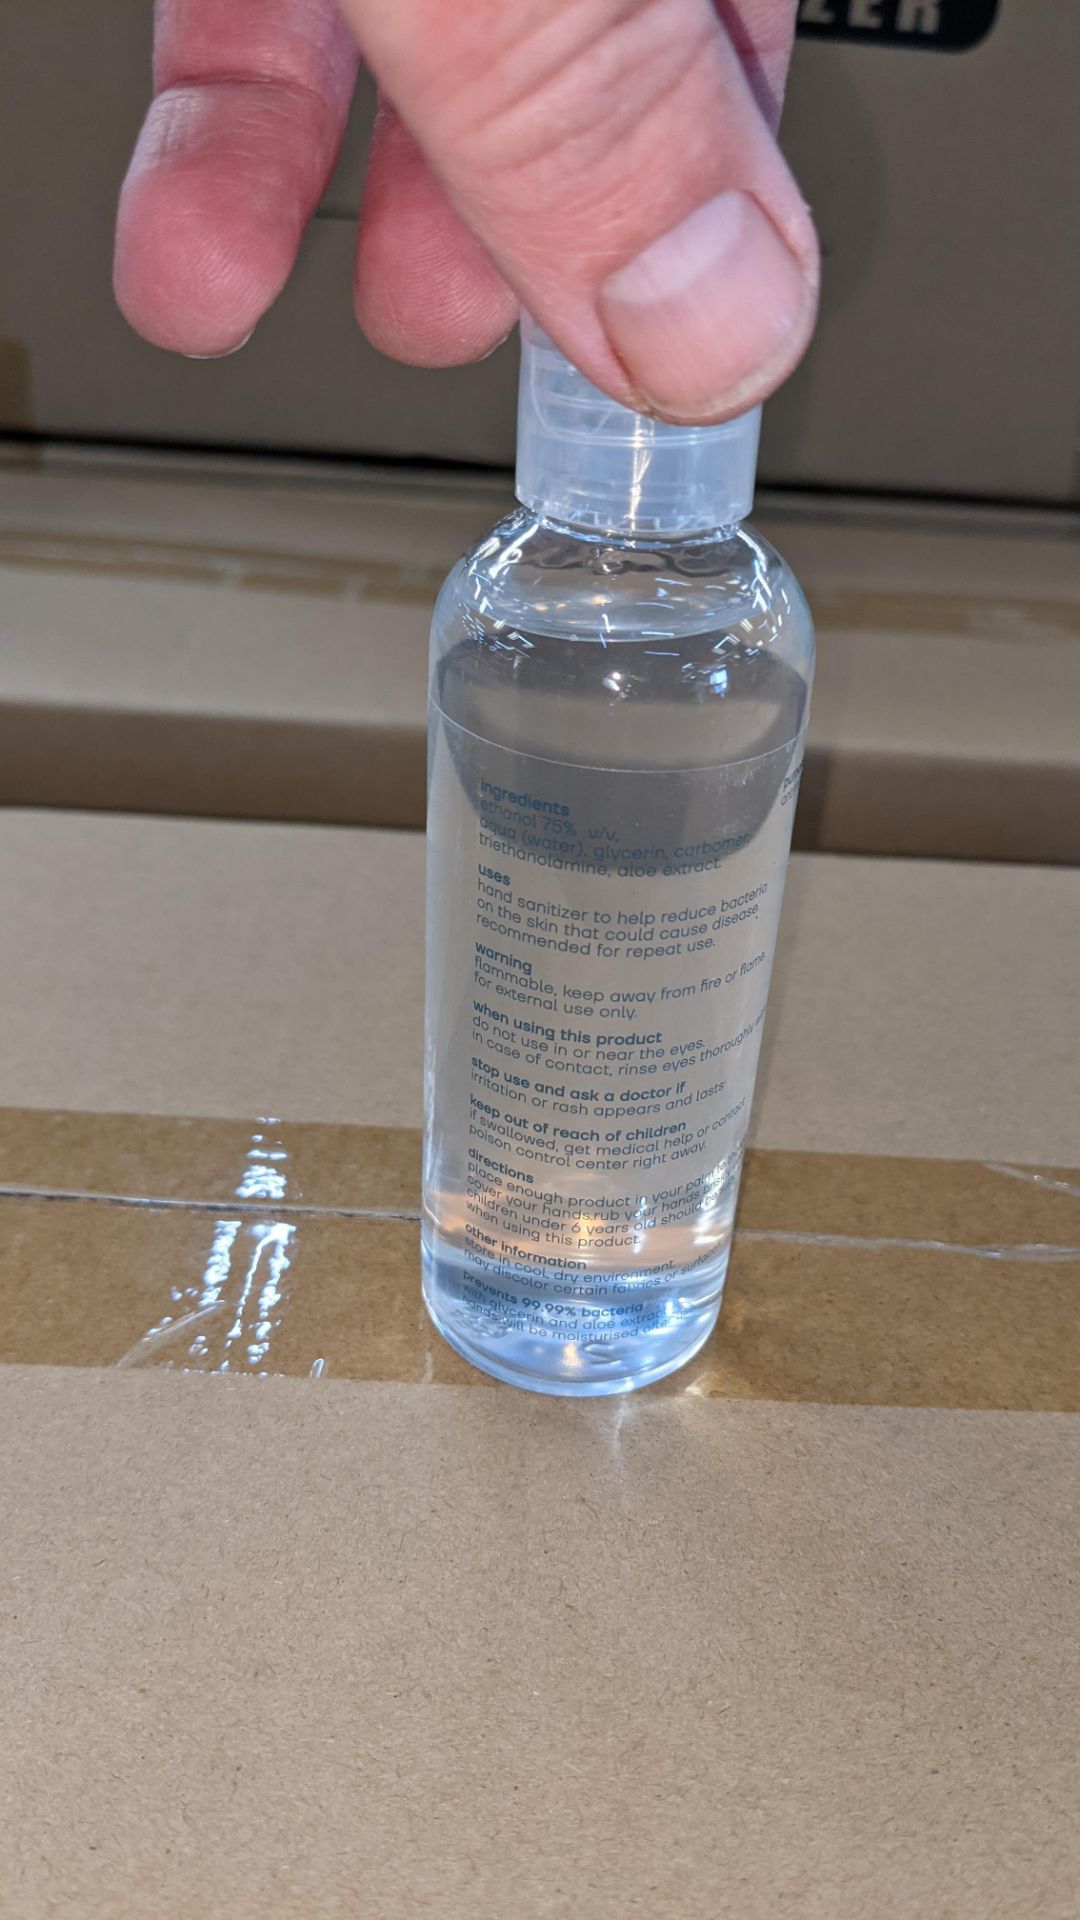 1,440 off 100ml bottles of Renew Hand Sanitiser waterless gel. Alcohol based (75% ethanol), Aloe ext - Image 9 of 12